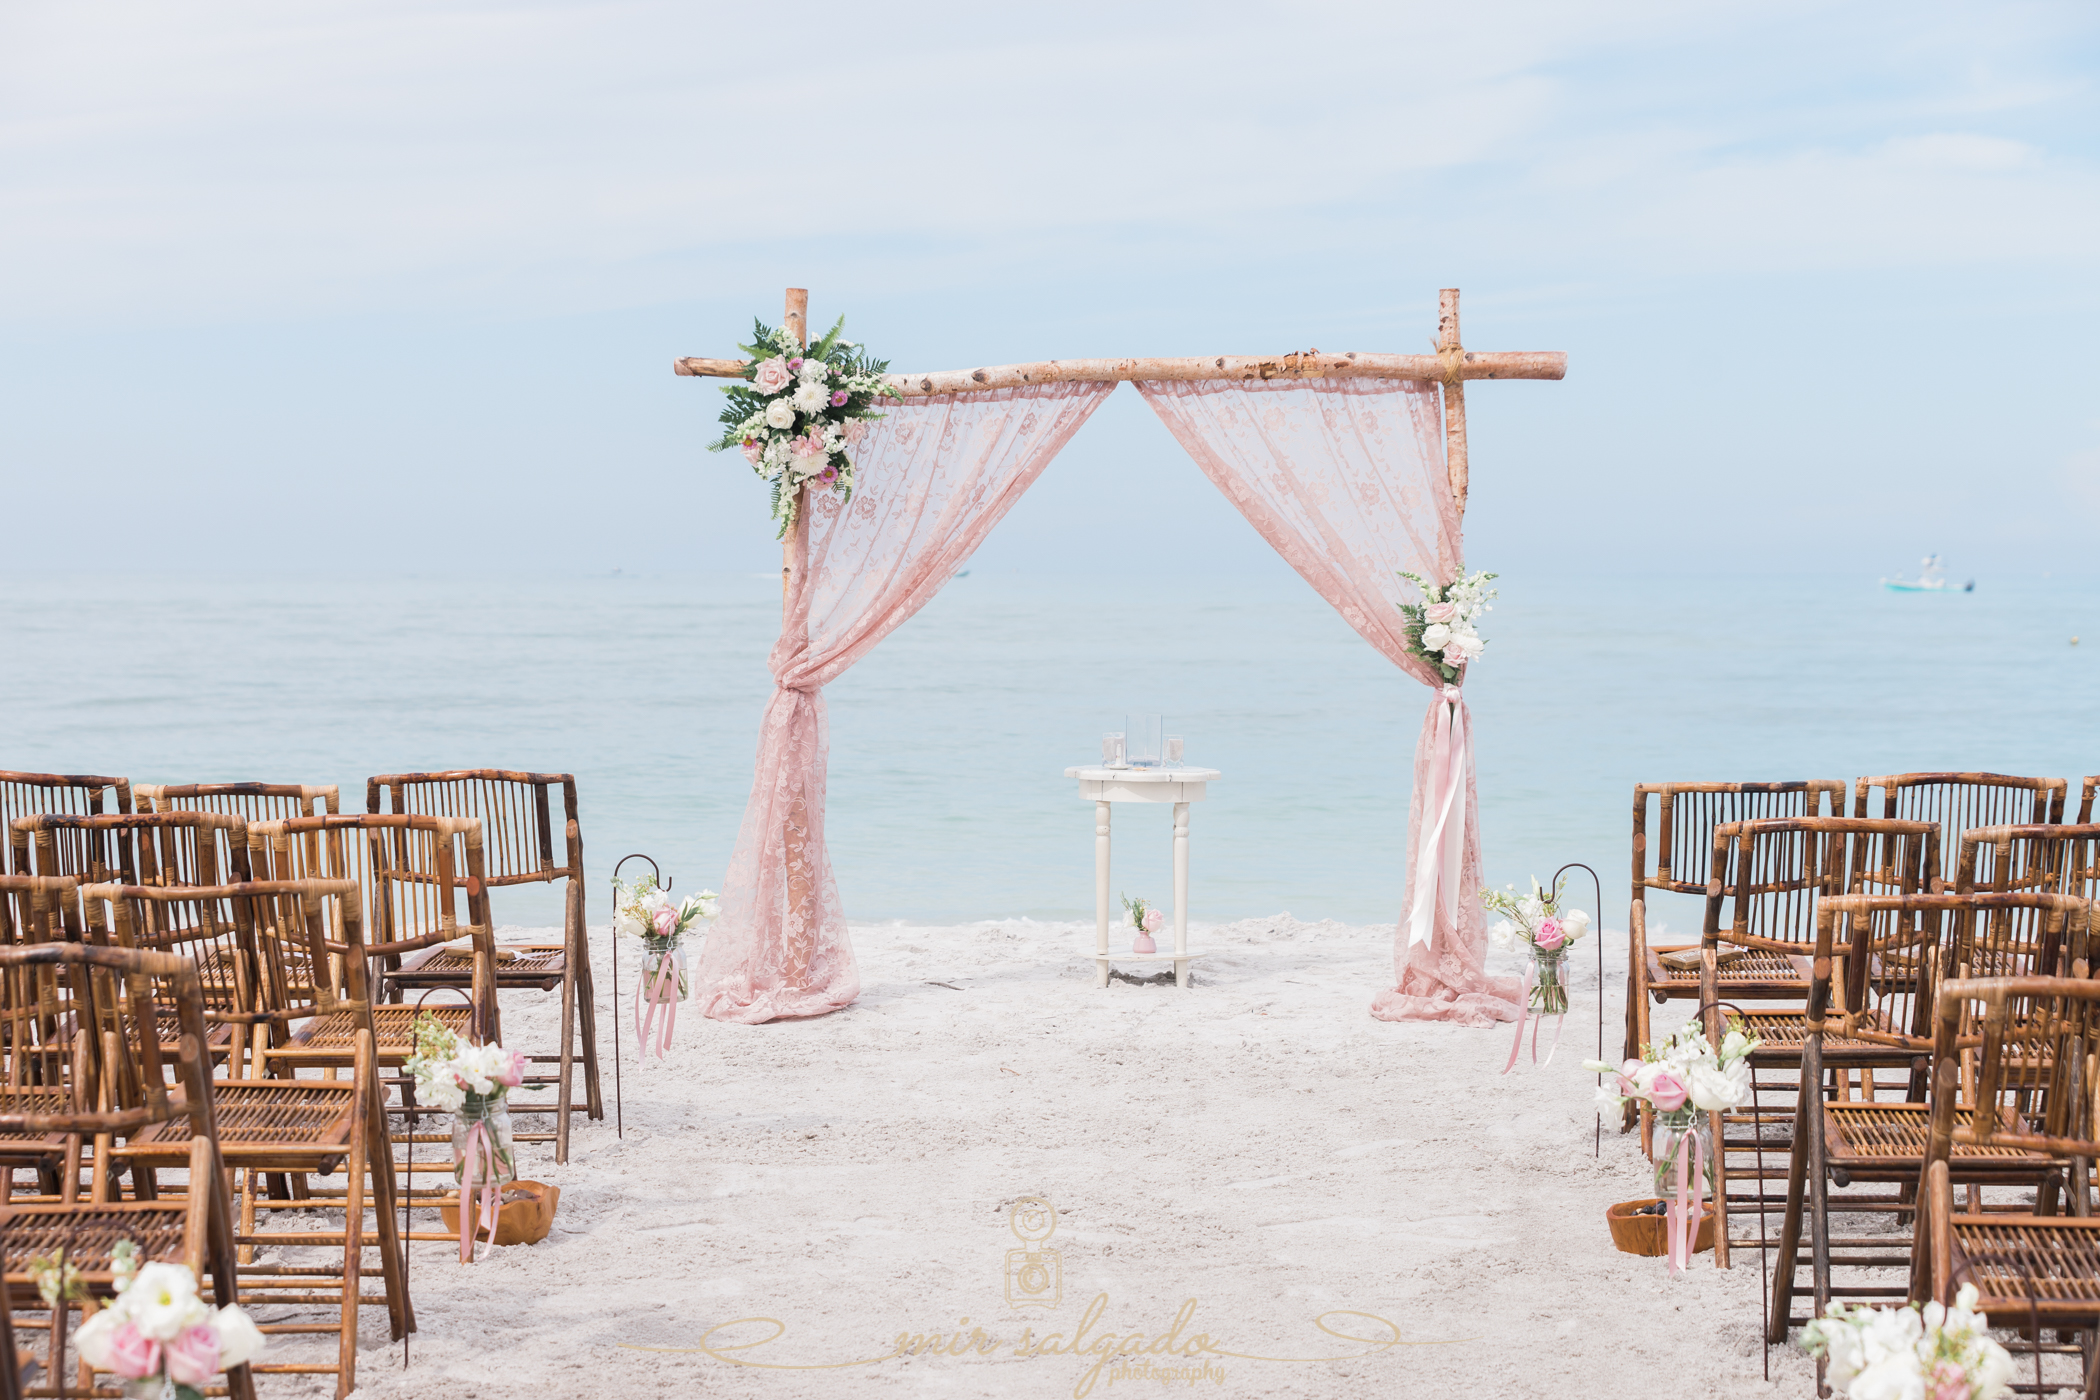 Sarasota Beach Weddings Best Location To Celebrate A Beach